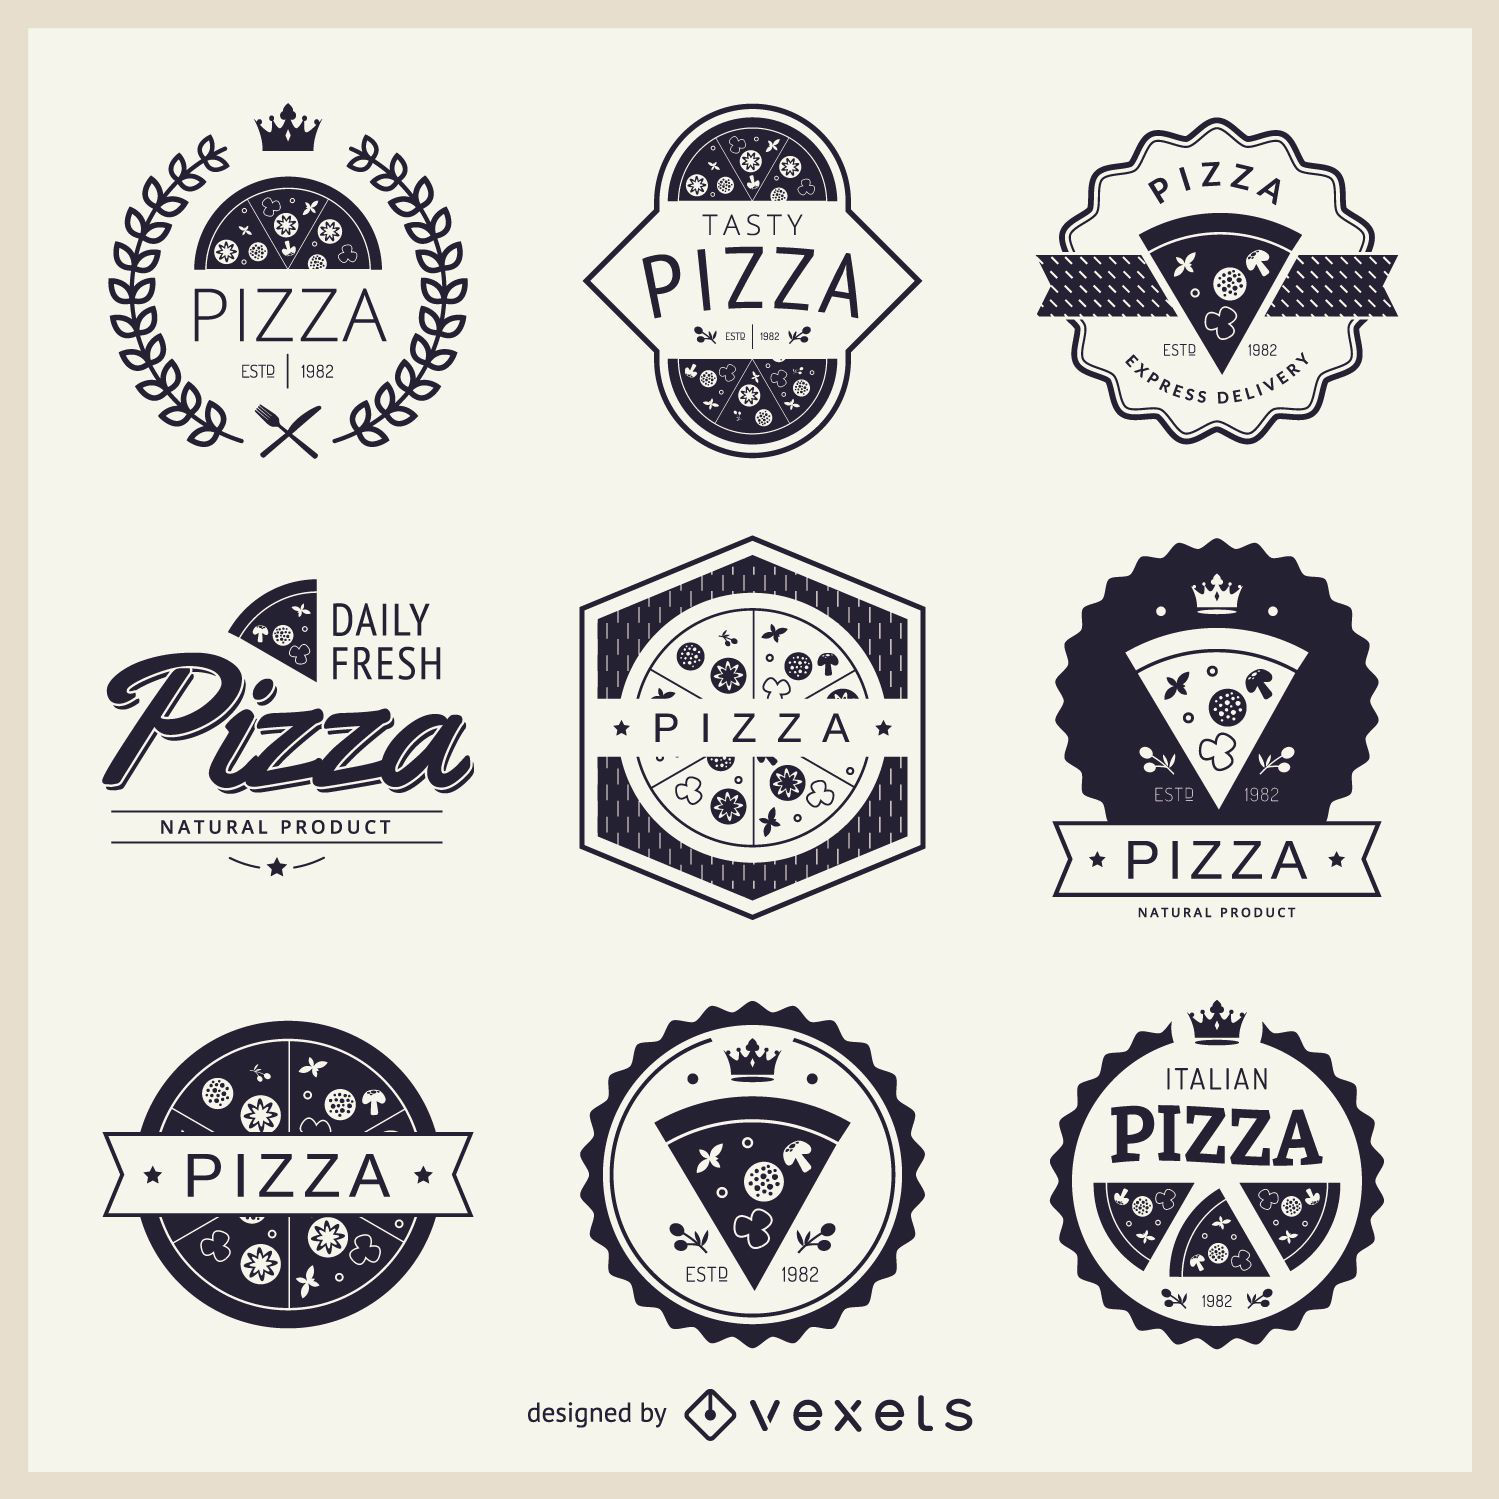 Hot and fresh pizza retro badge design. Vector. Vintage design for